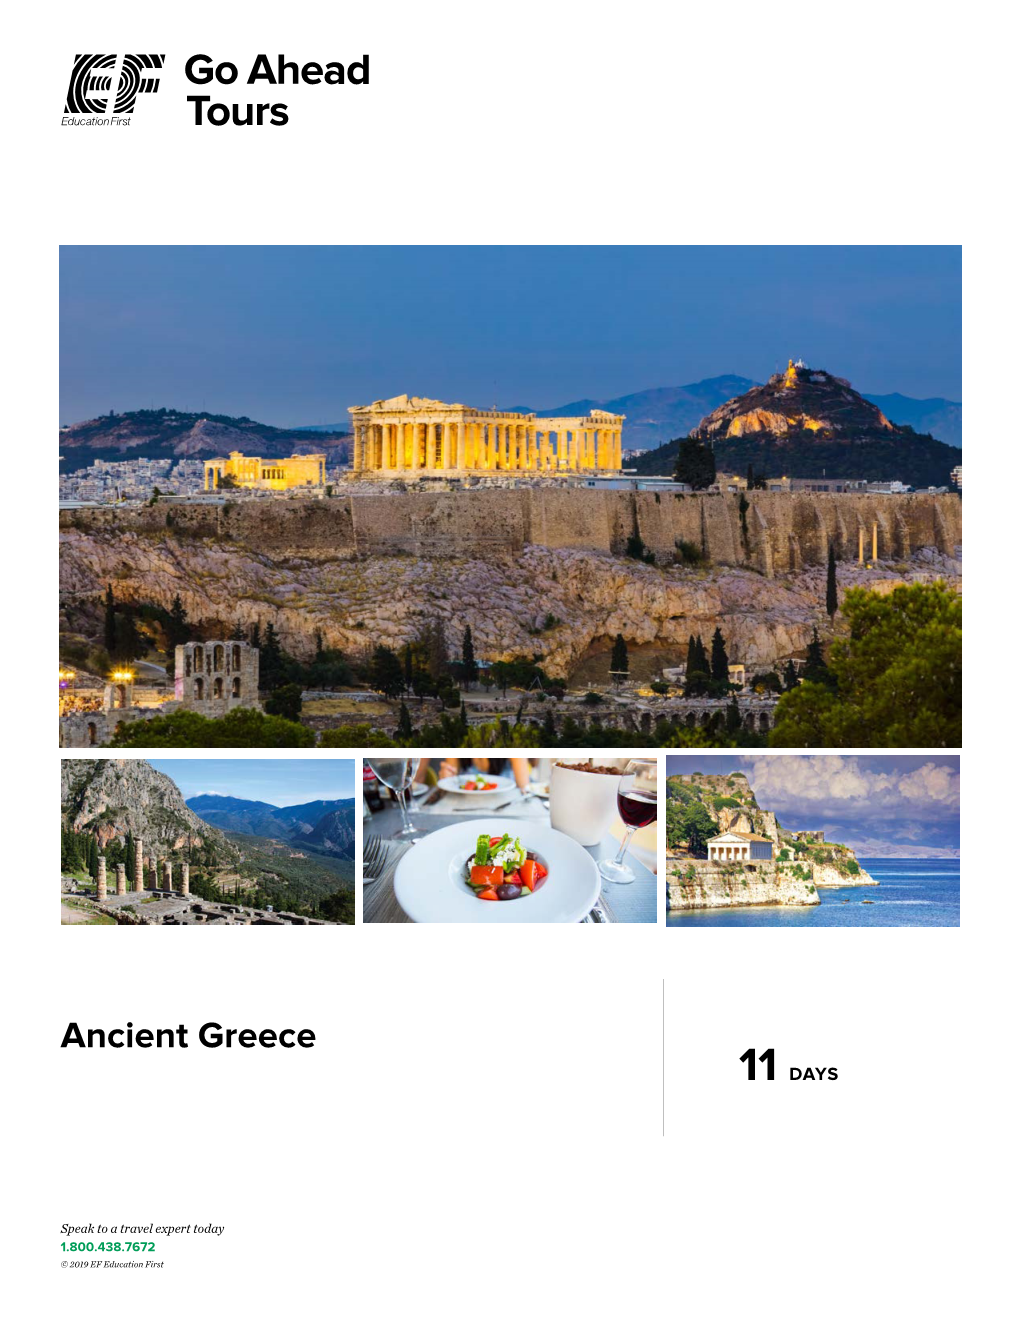 Ancient Greece 11 DAYS